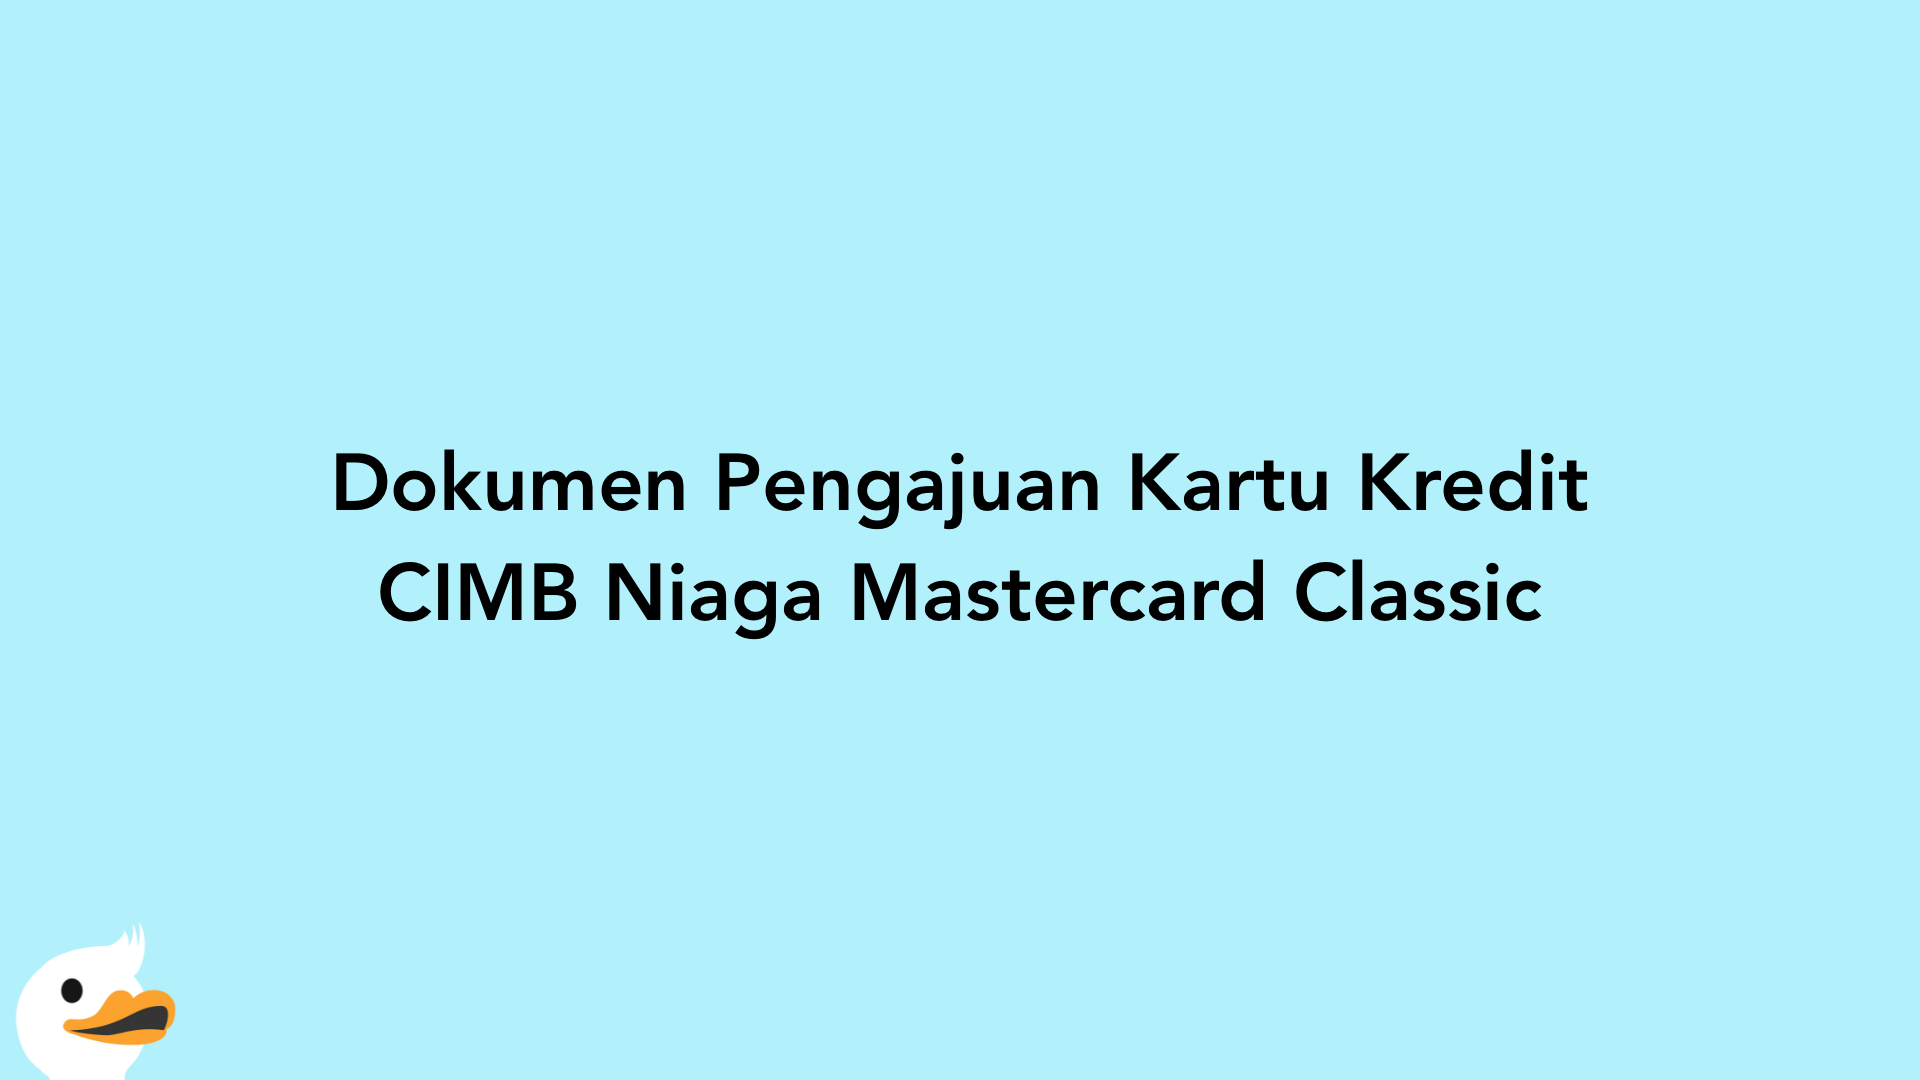 Dokumen Pengajuan Kartu Kredit CIMB Niaga Mastercard Classic